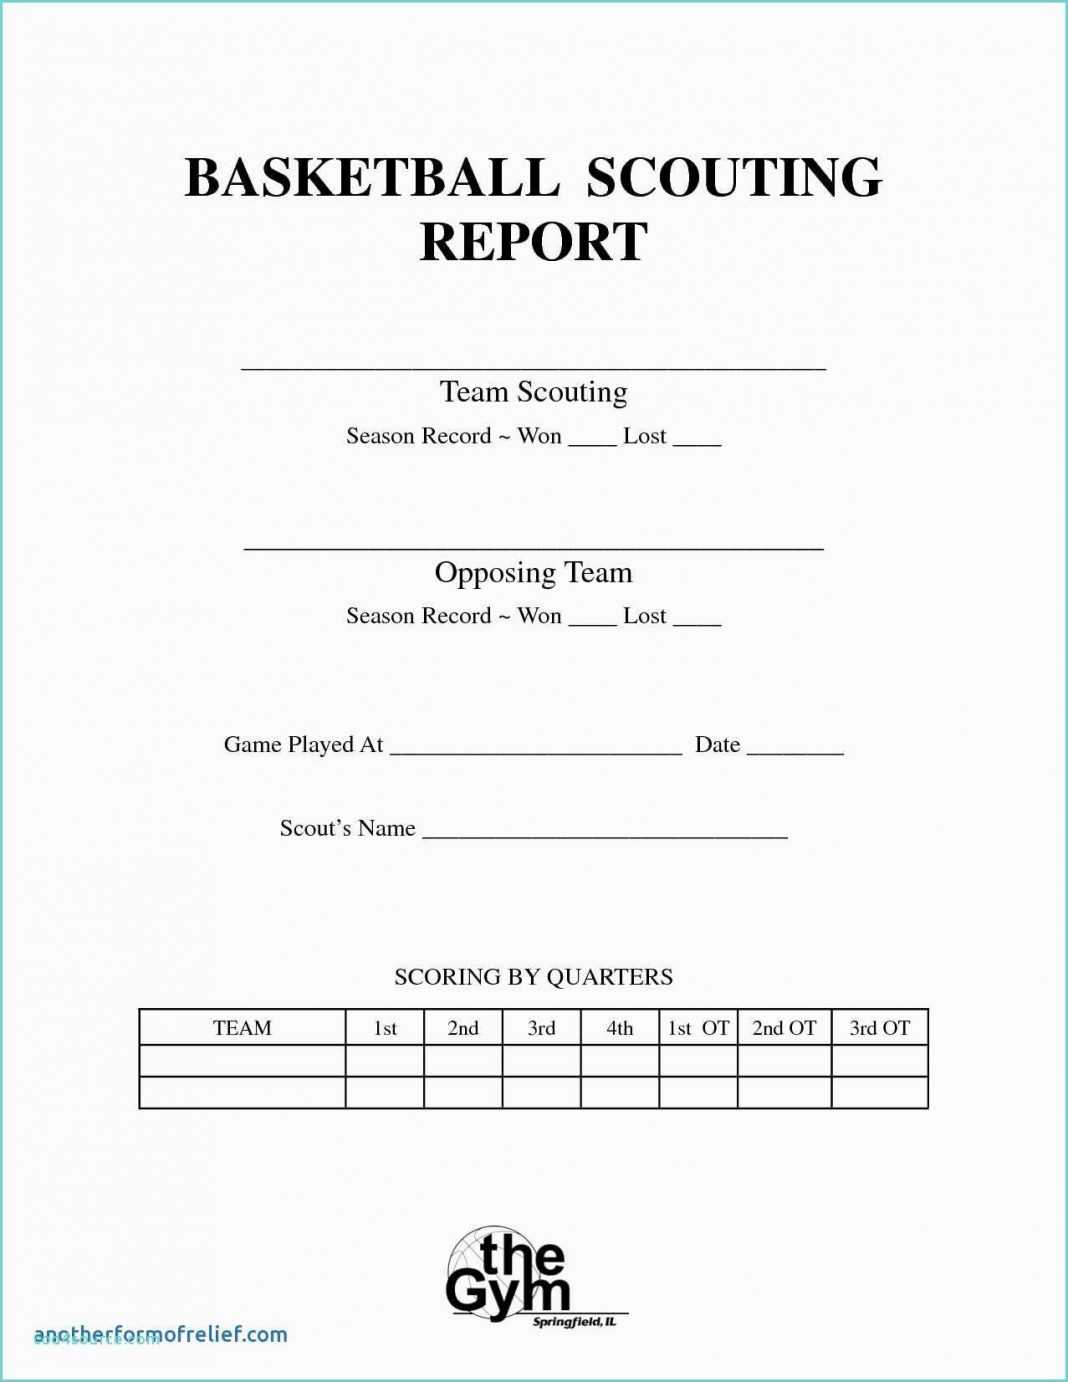 Report Examples Gamechart21 College Basketball Scouting With Scouting Report Basketball Template